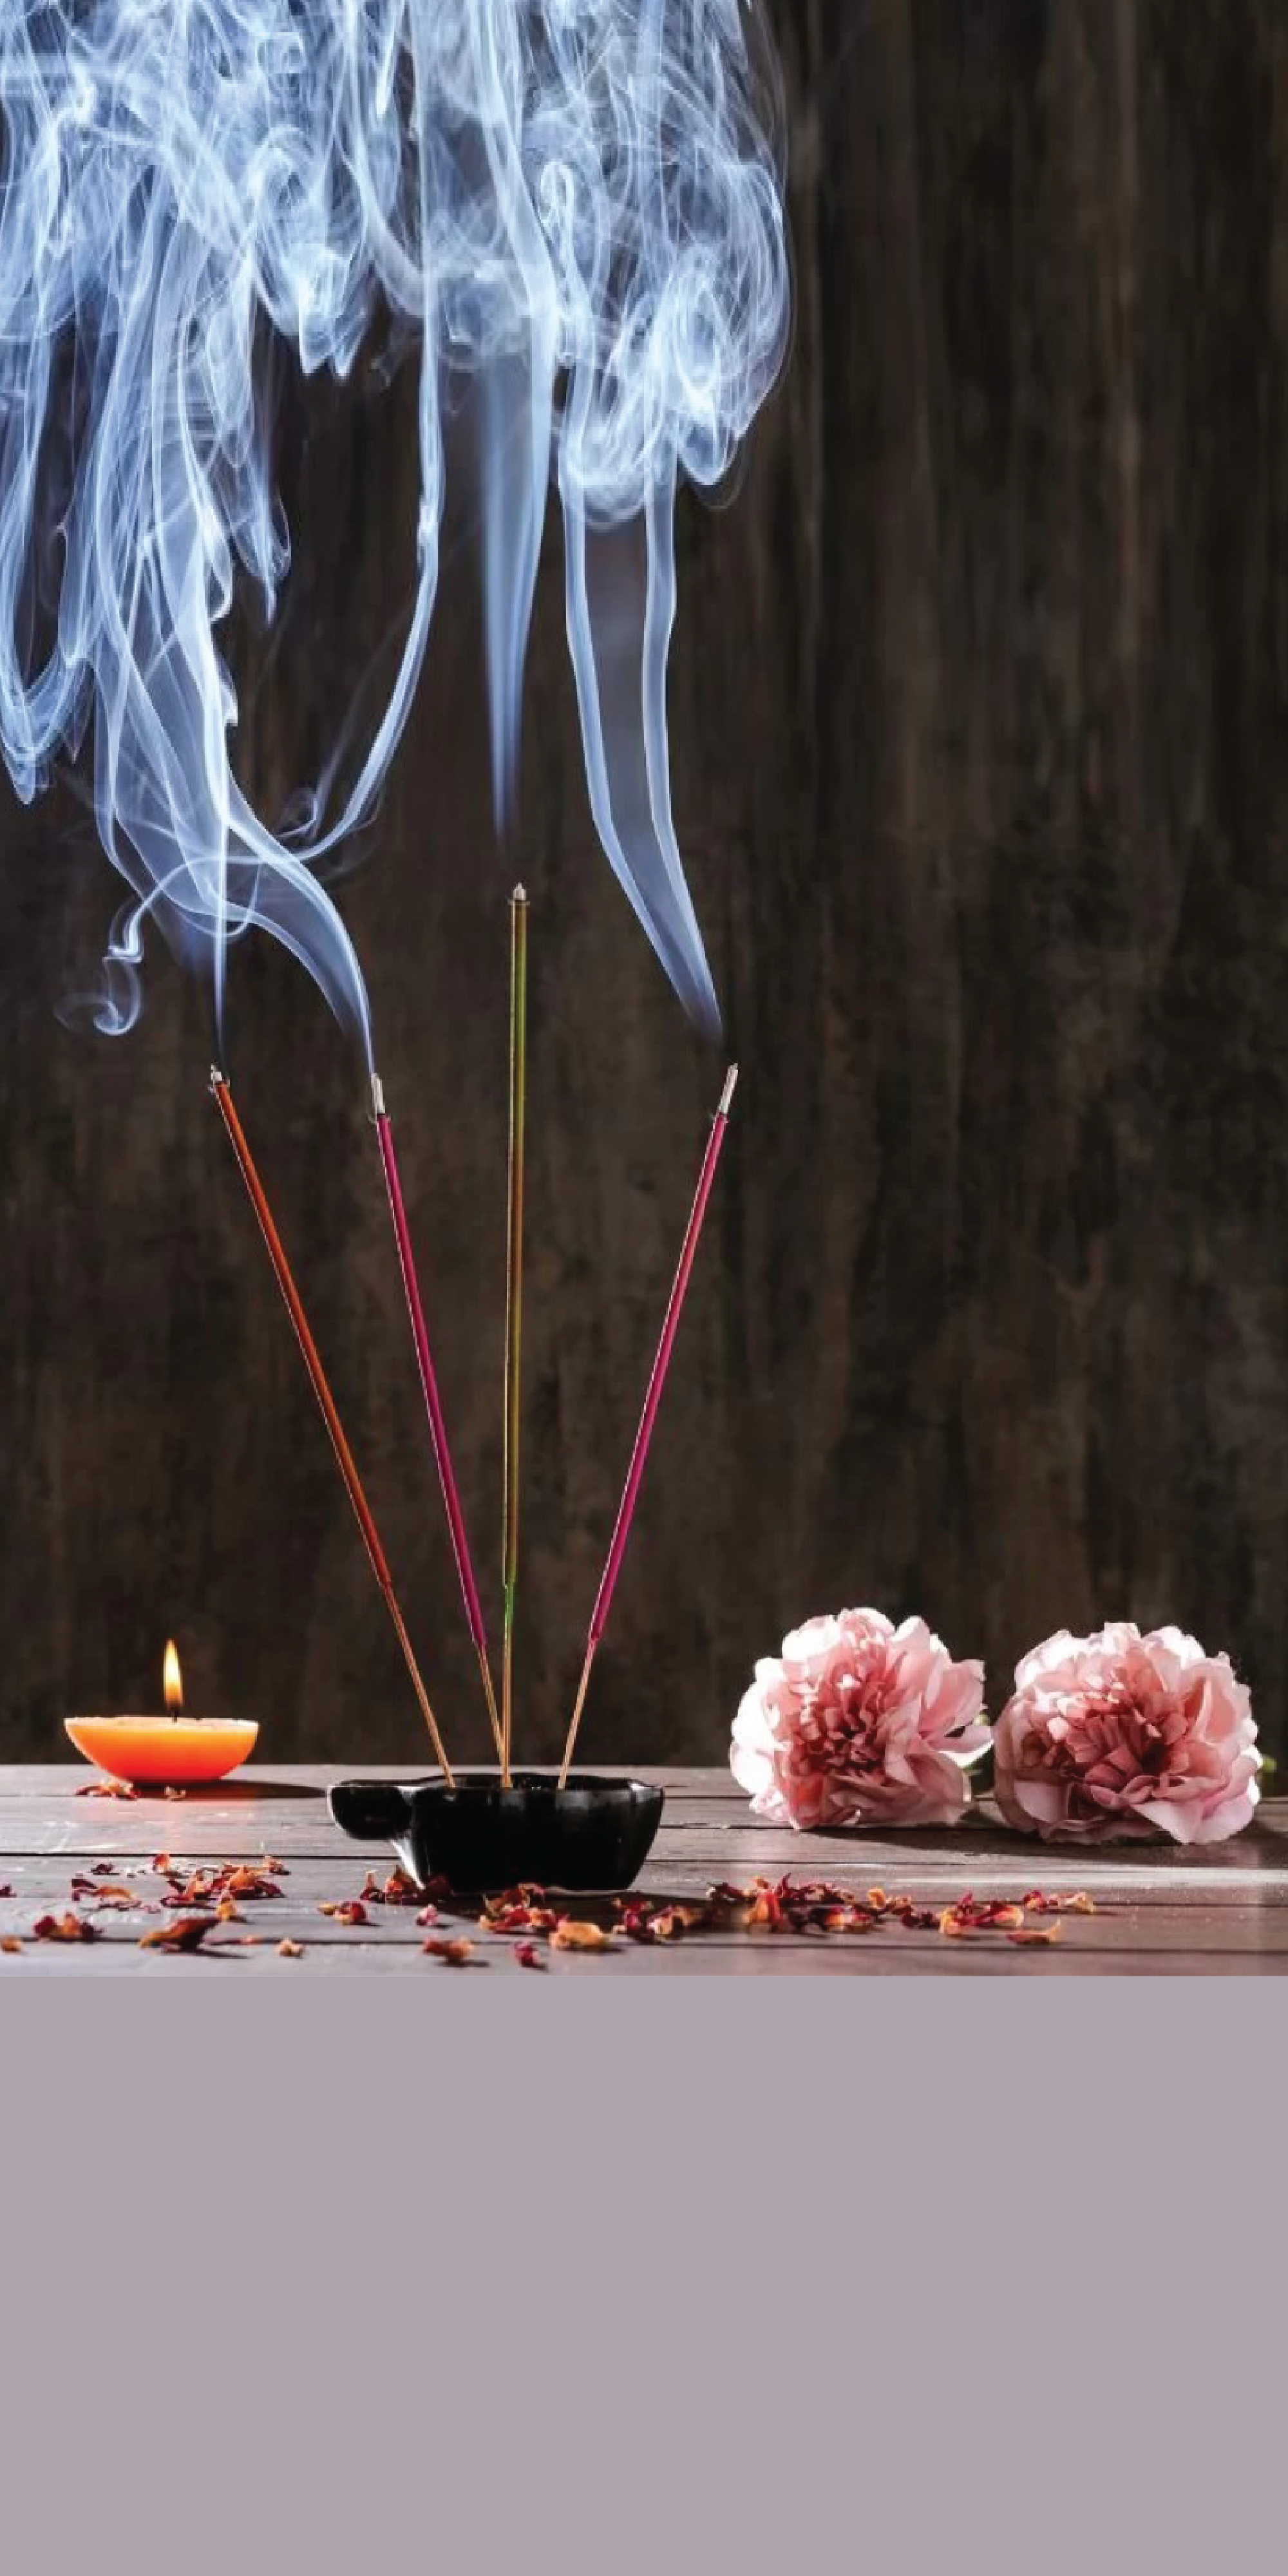 tatva-yog-|-eka---rose-handcrafted-&-natural-masala-incense-sticks-(-pack-of-30-sticks-)